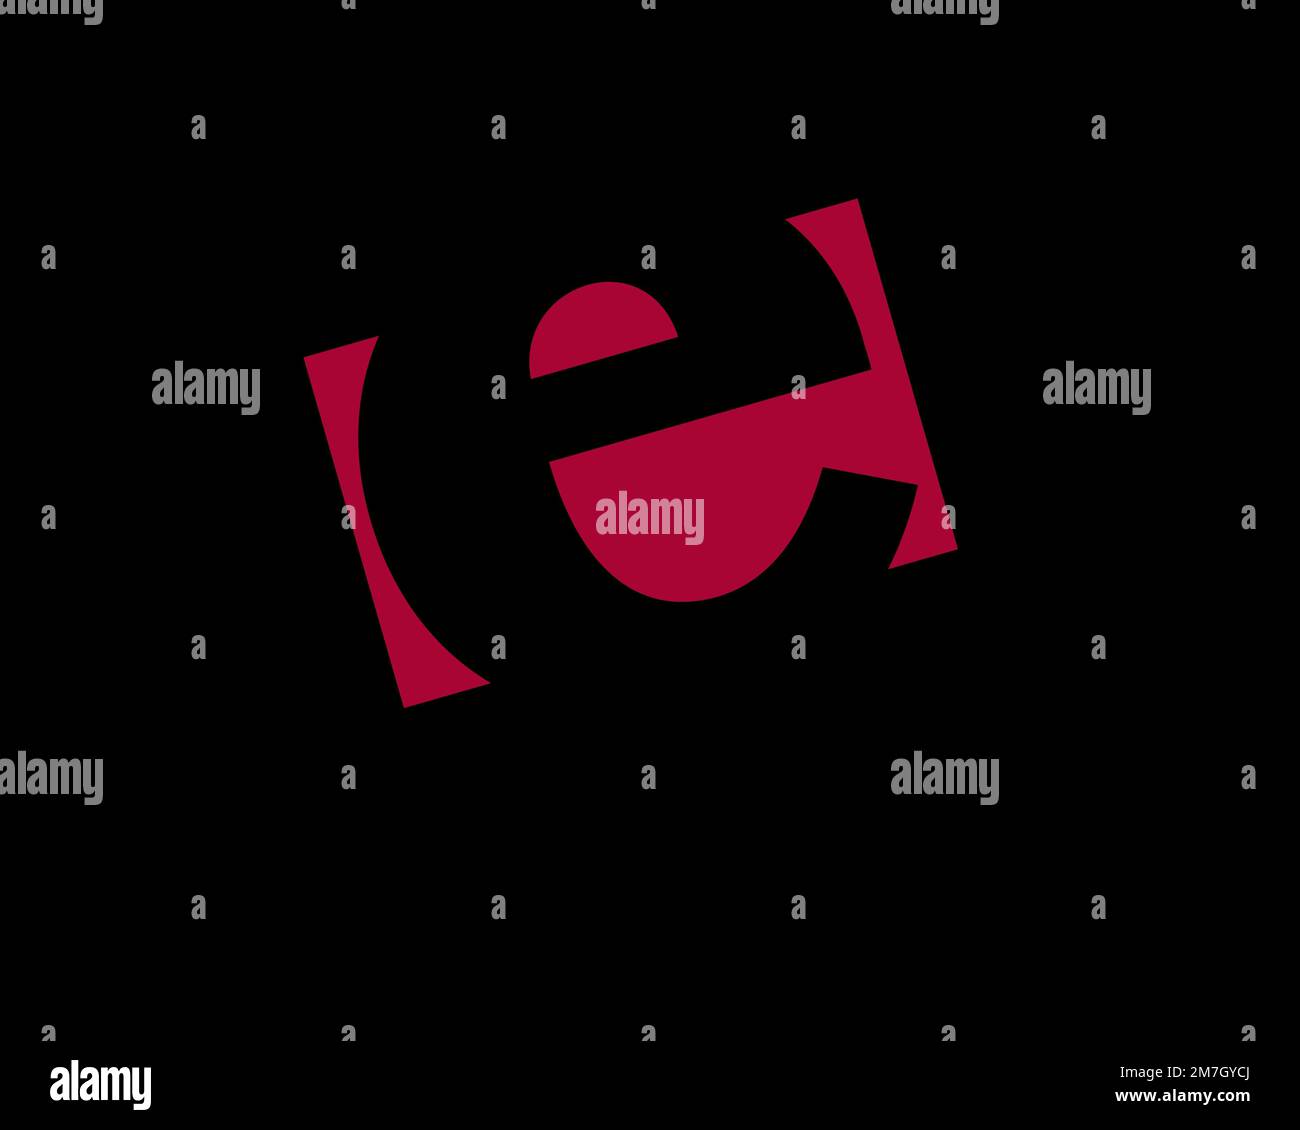 Erlang programming language, rotated logo, black background Stock Photo